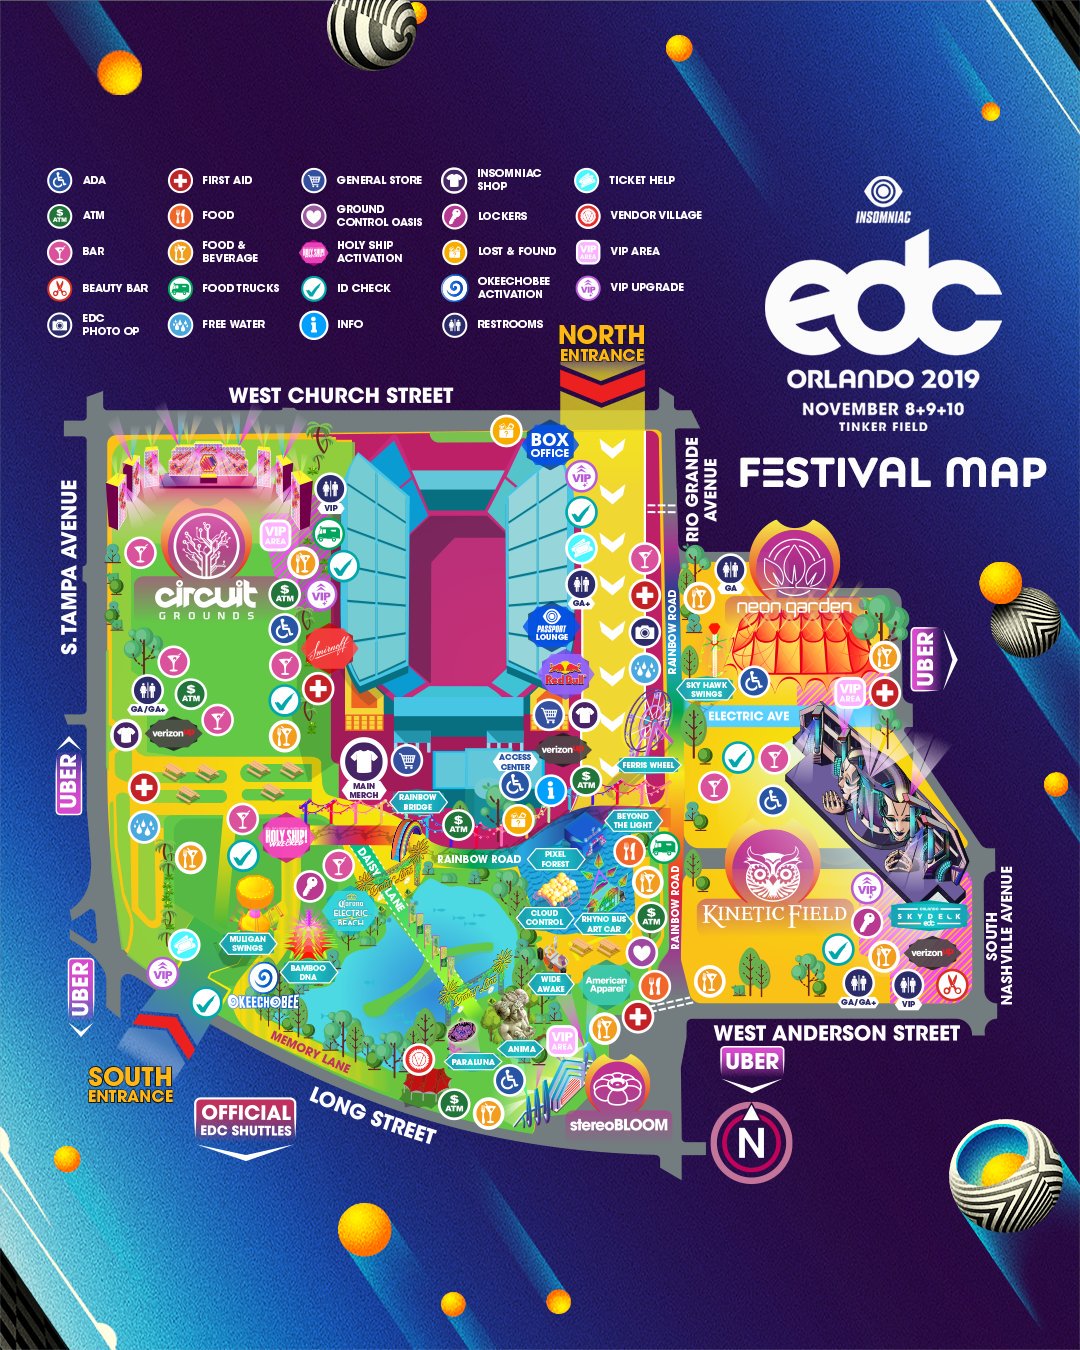 EDC Orlando 2019 Set Times, Festival Map, and Essential Info Blogging